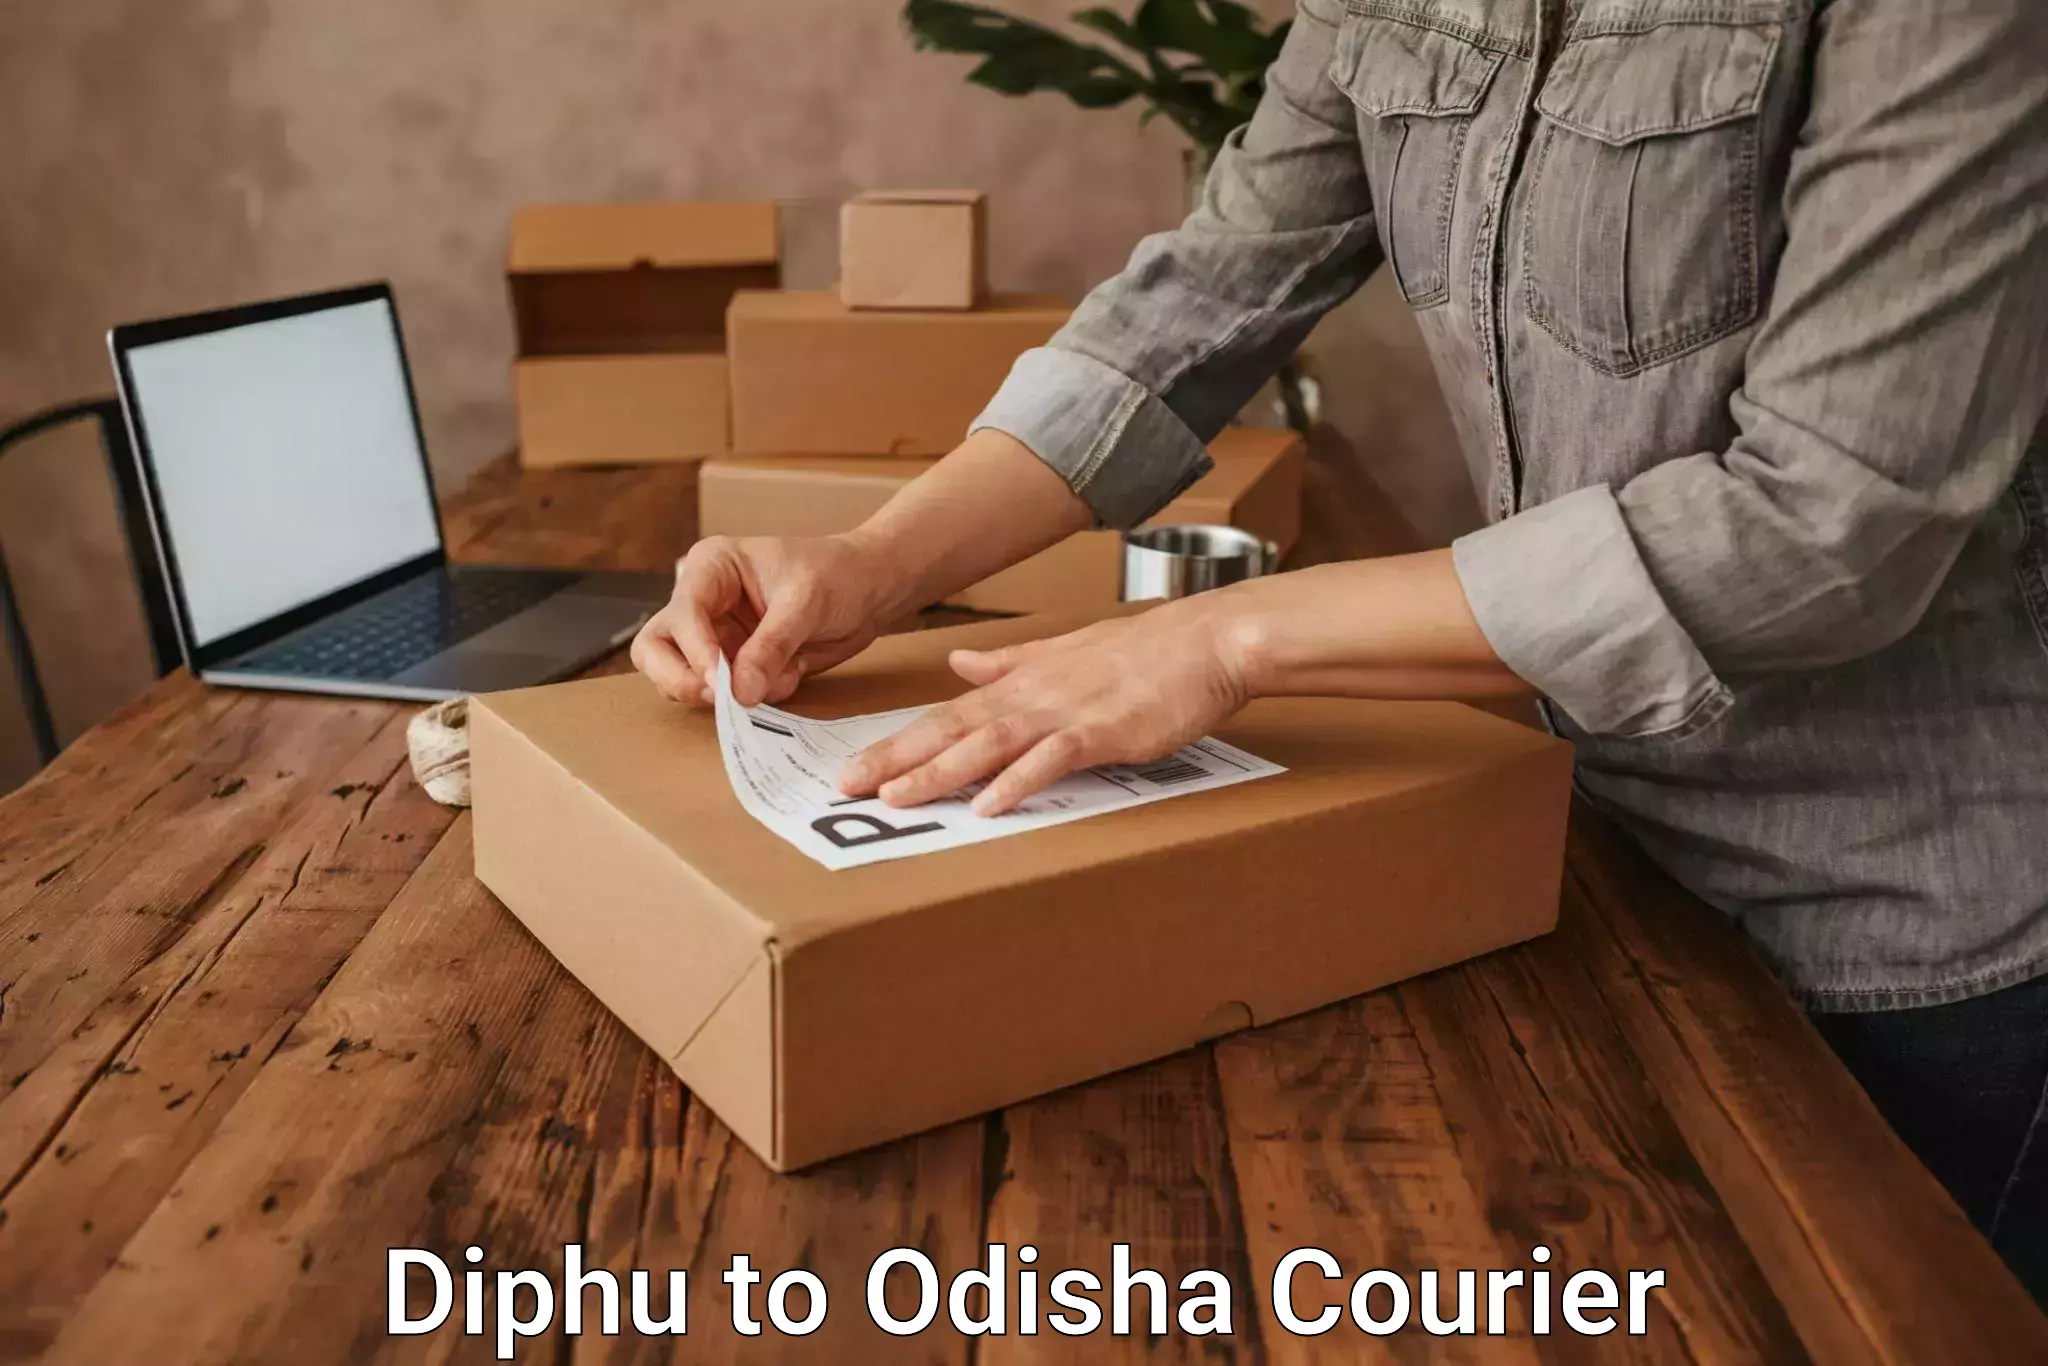 Courier service comparison Diphu to Paradip Port